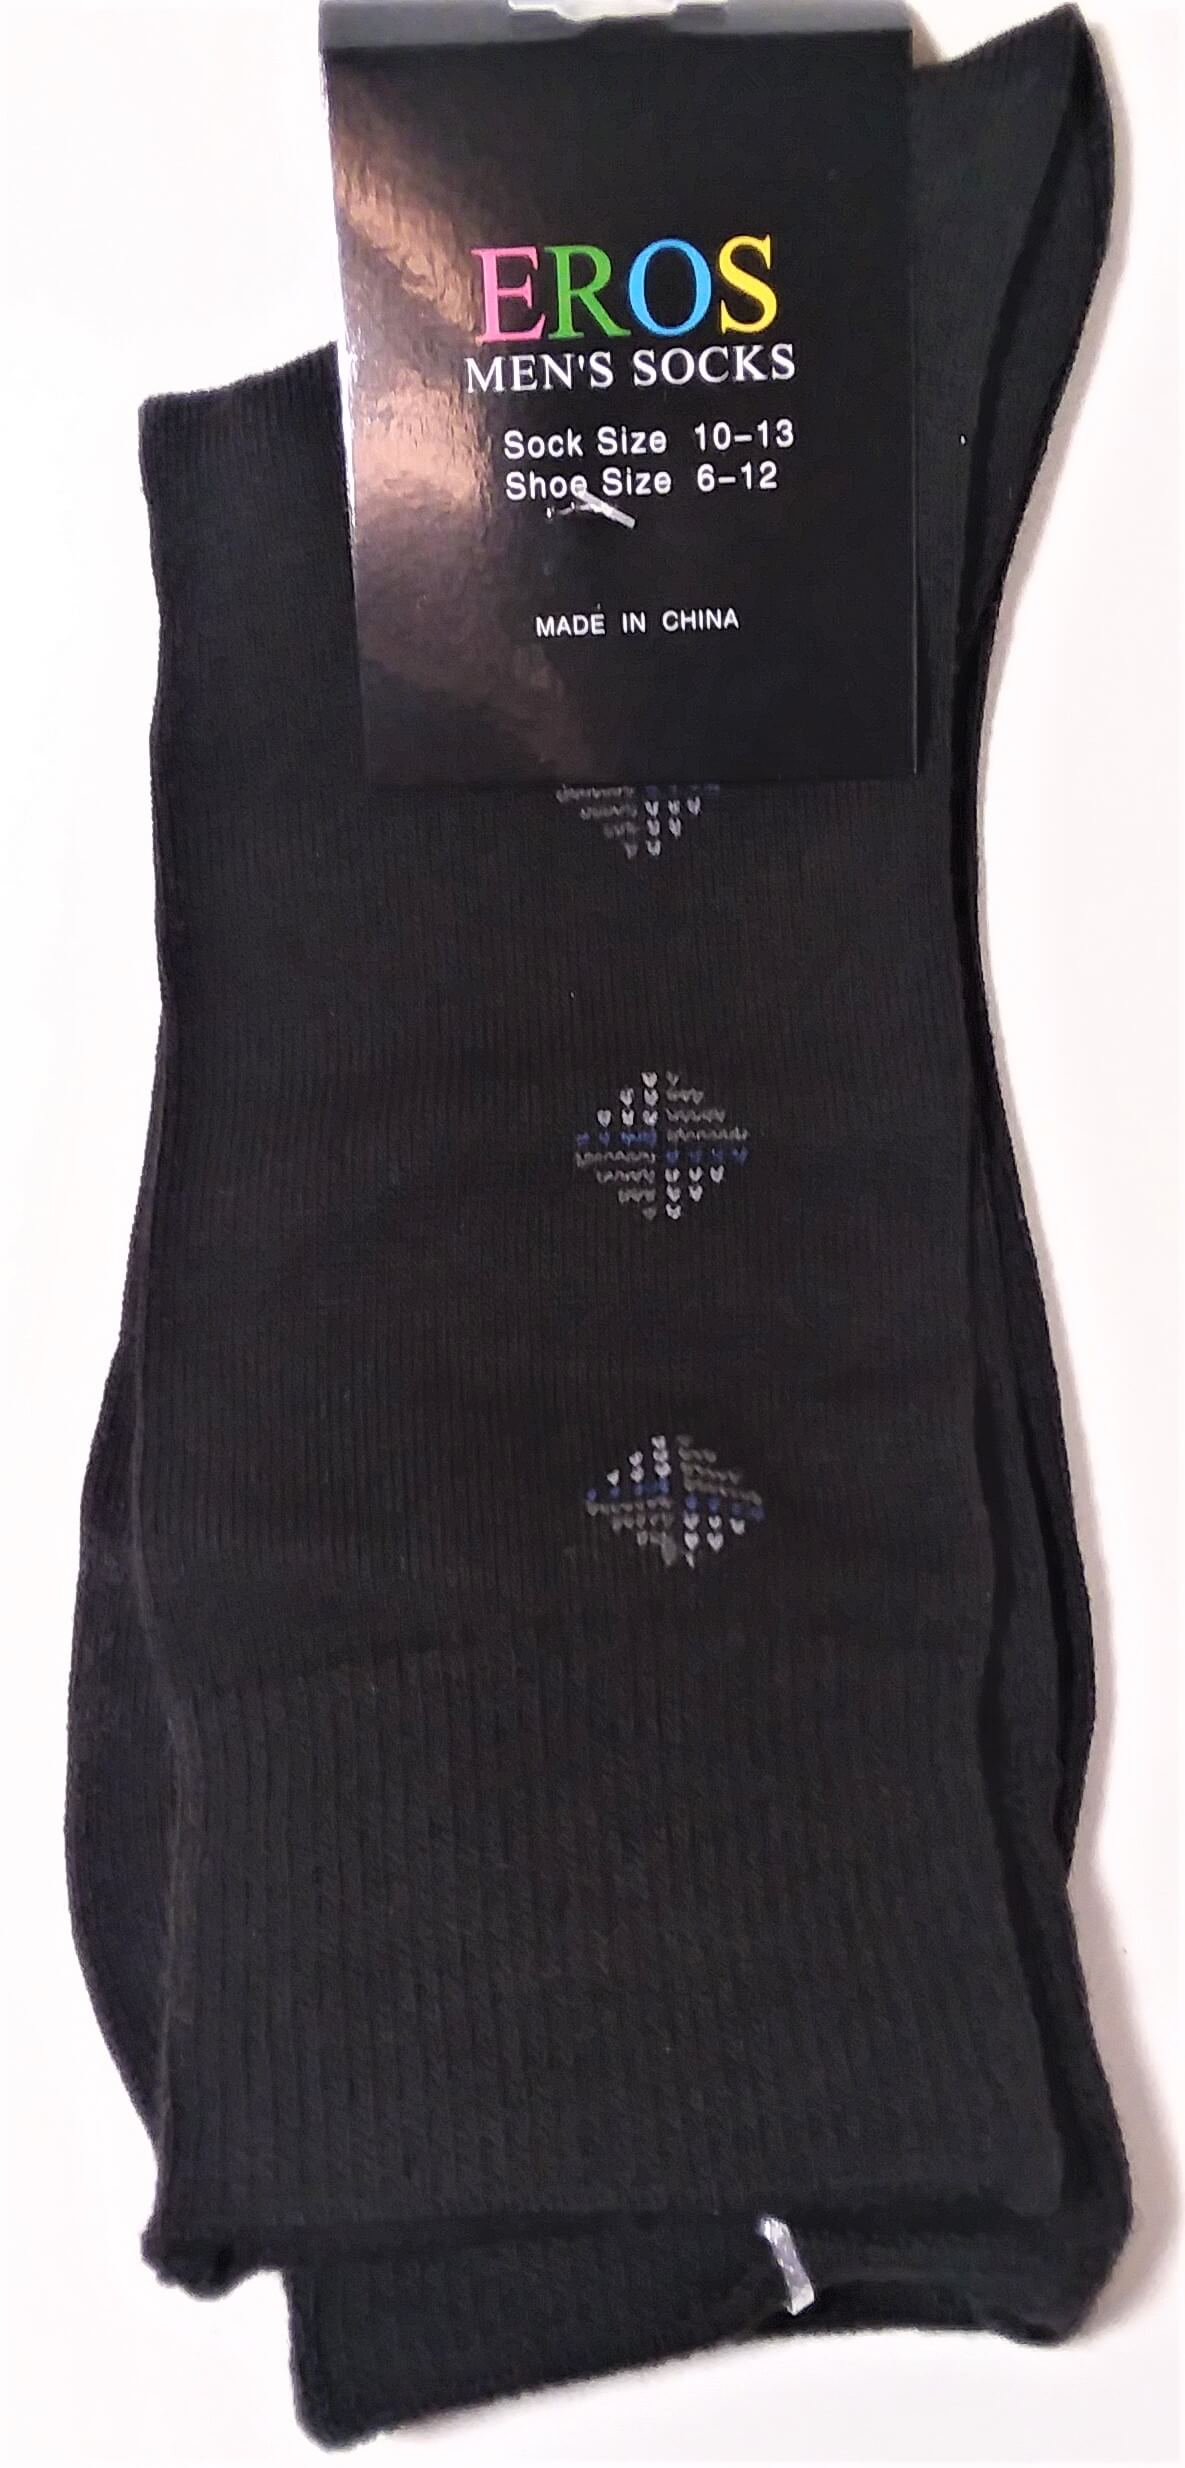 Men's Casual Crew Socks.Black with dark gray and light gray diamonds